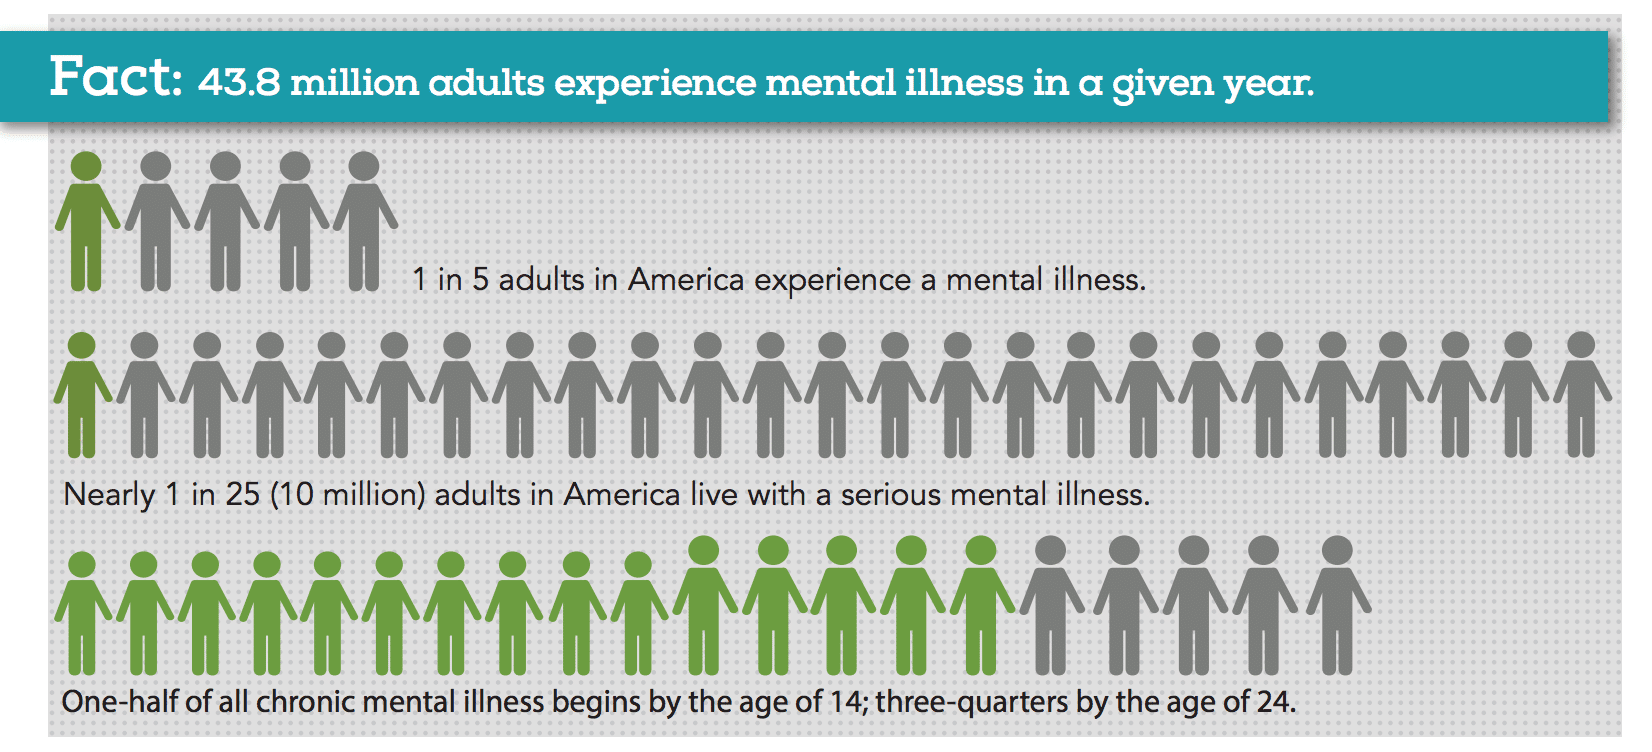 Mental Health Awareness - Facts